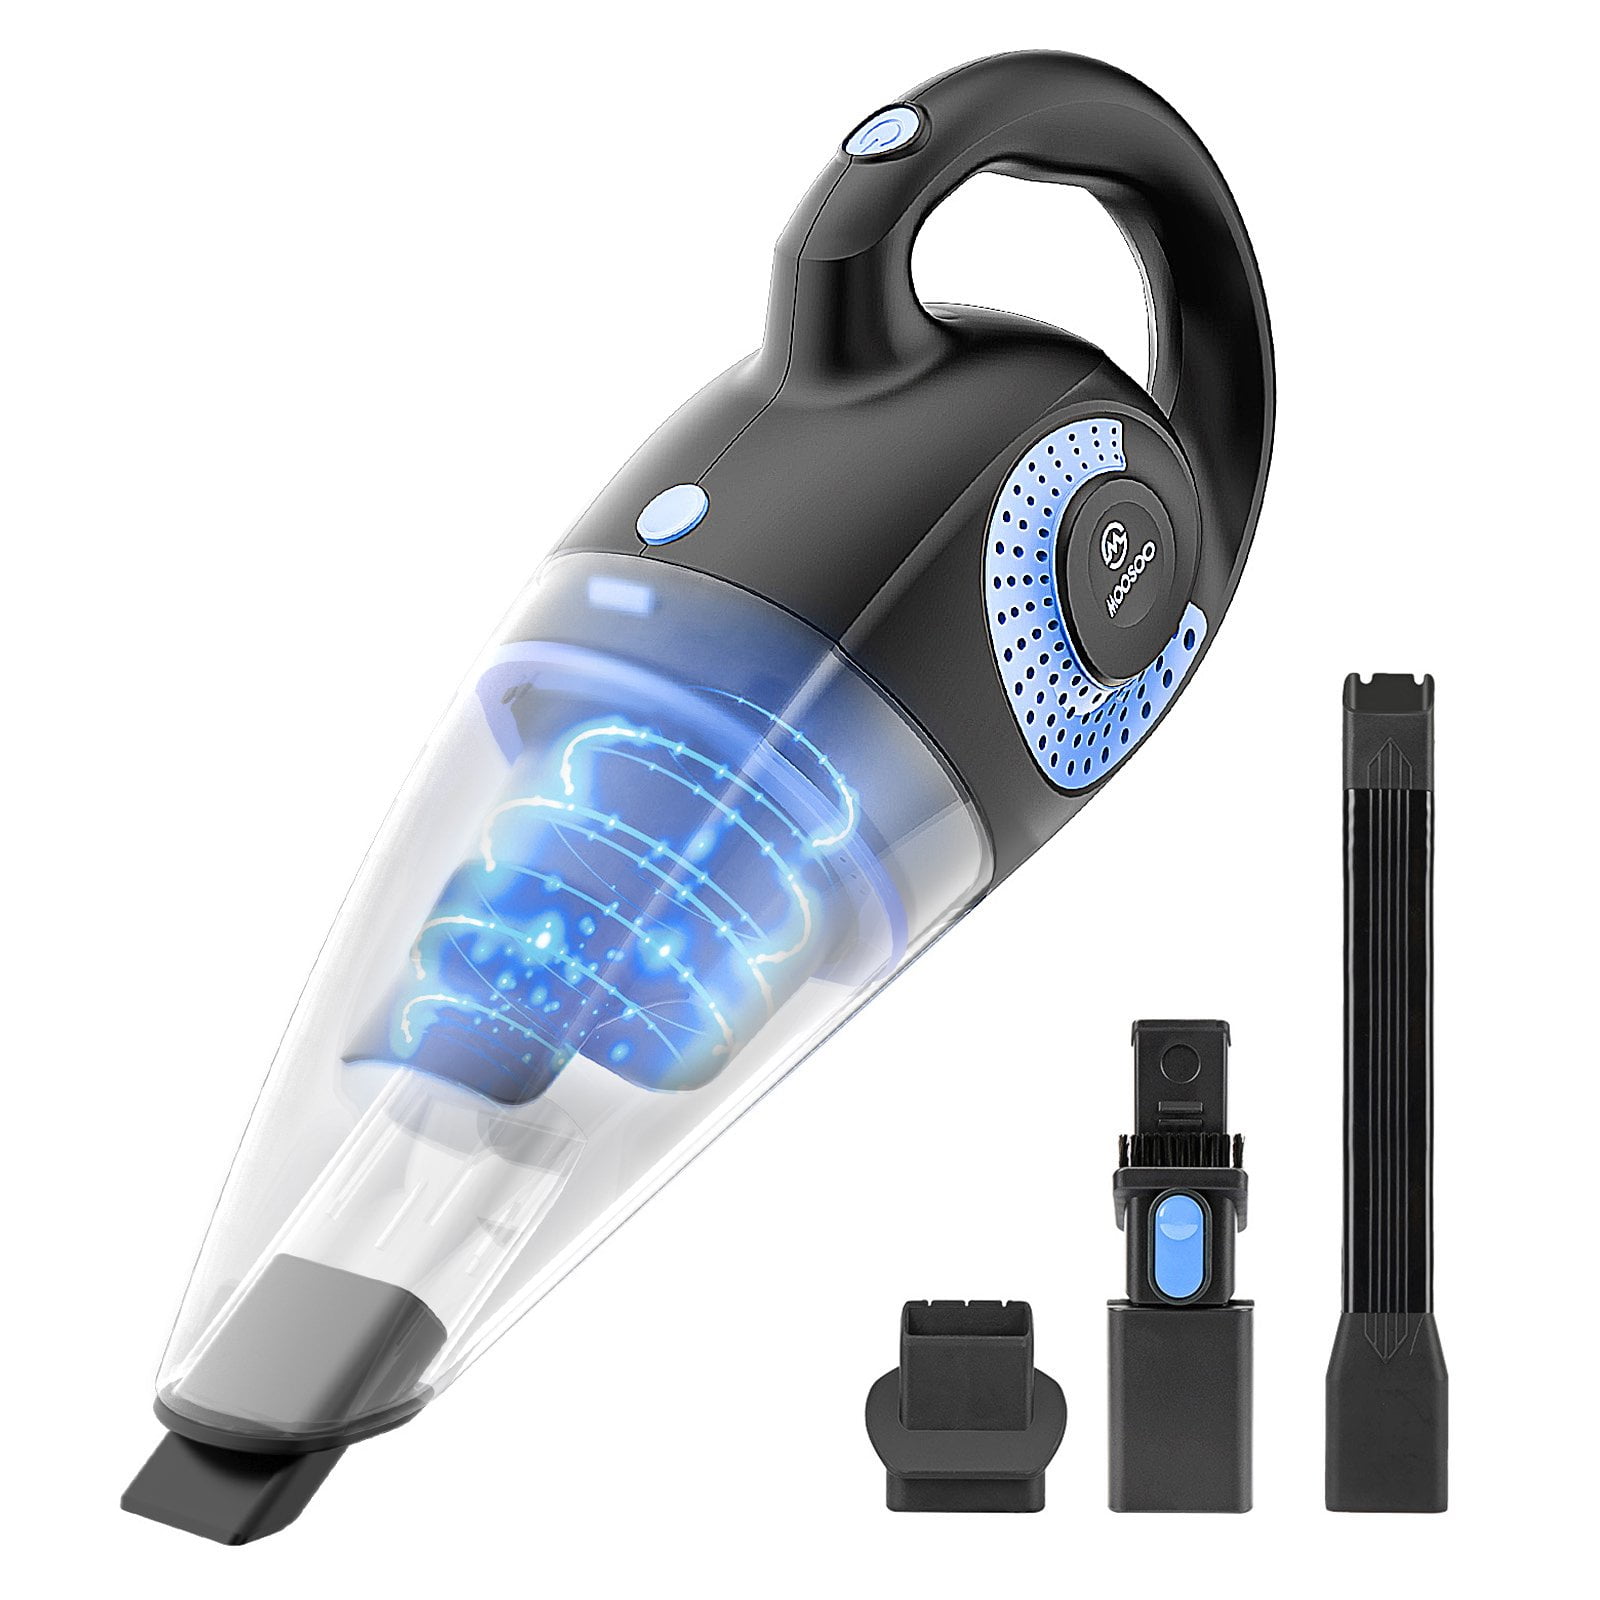 BLACK+DECKER DUSTBUSTER 120-Volt Corded Handheld Vacuum in the Handheld  Vacuums department at